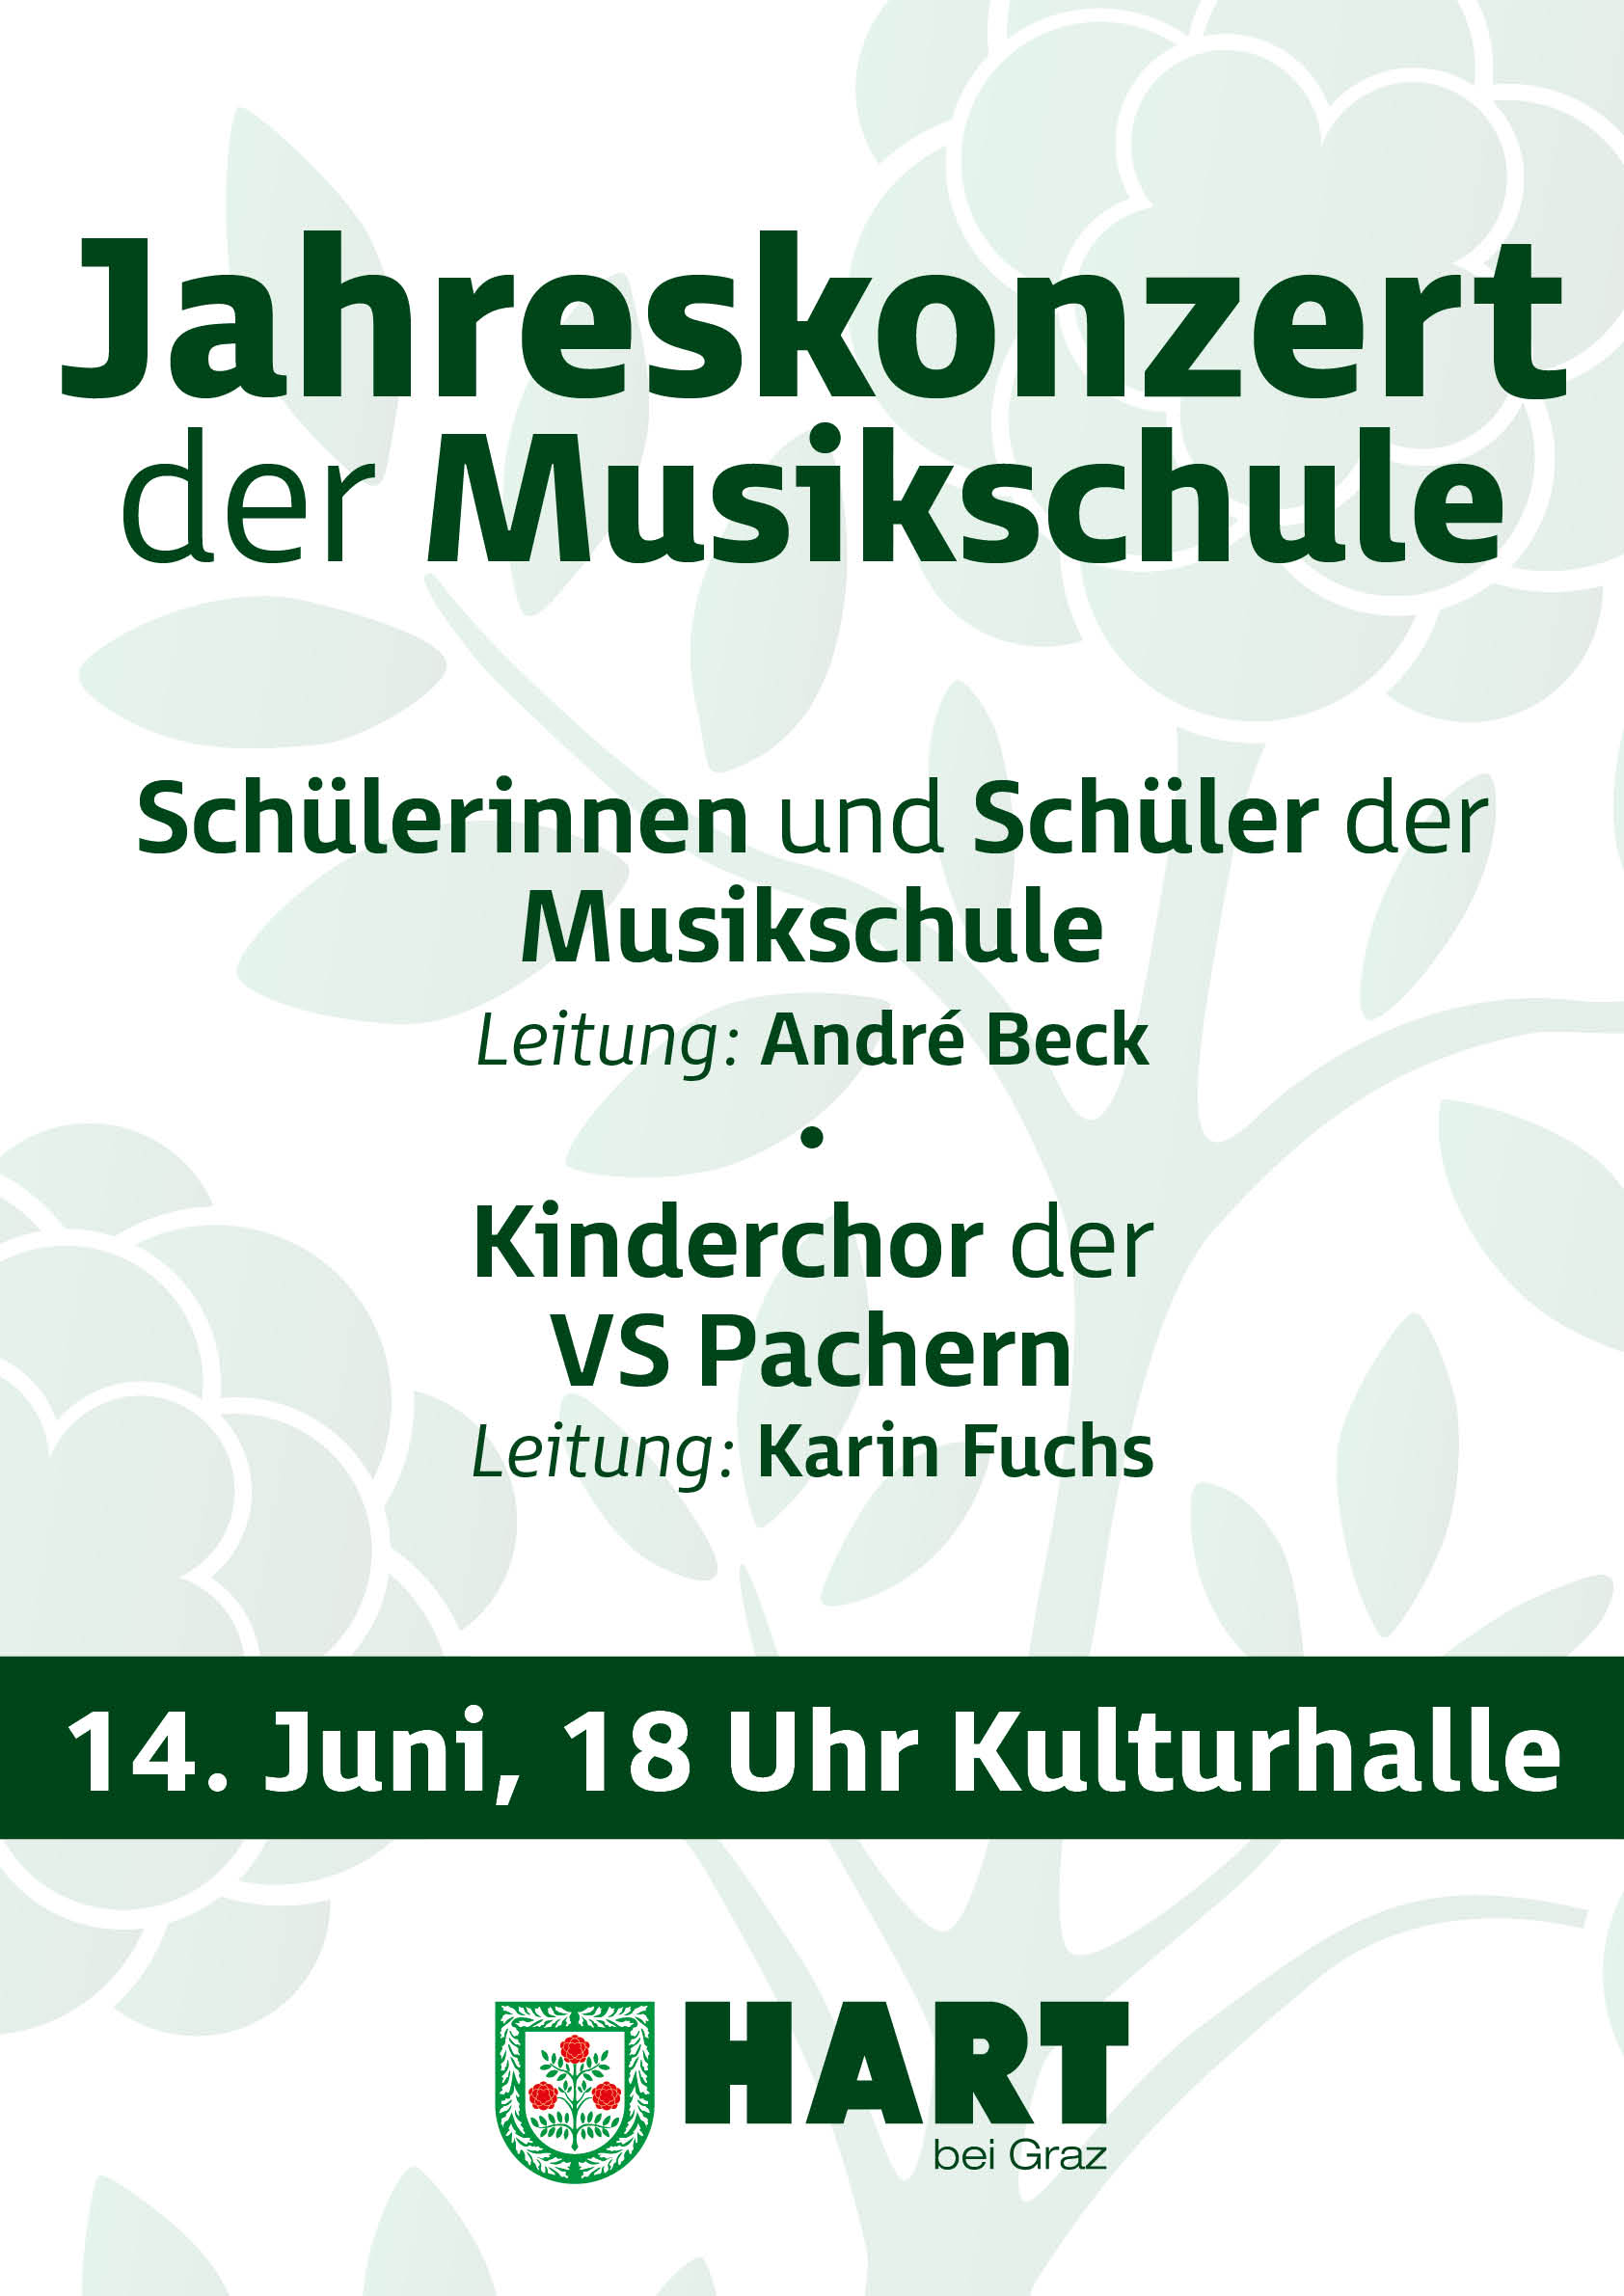 20190614 Musikschule Plakat v1 019_0.jpg